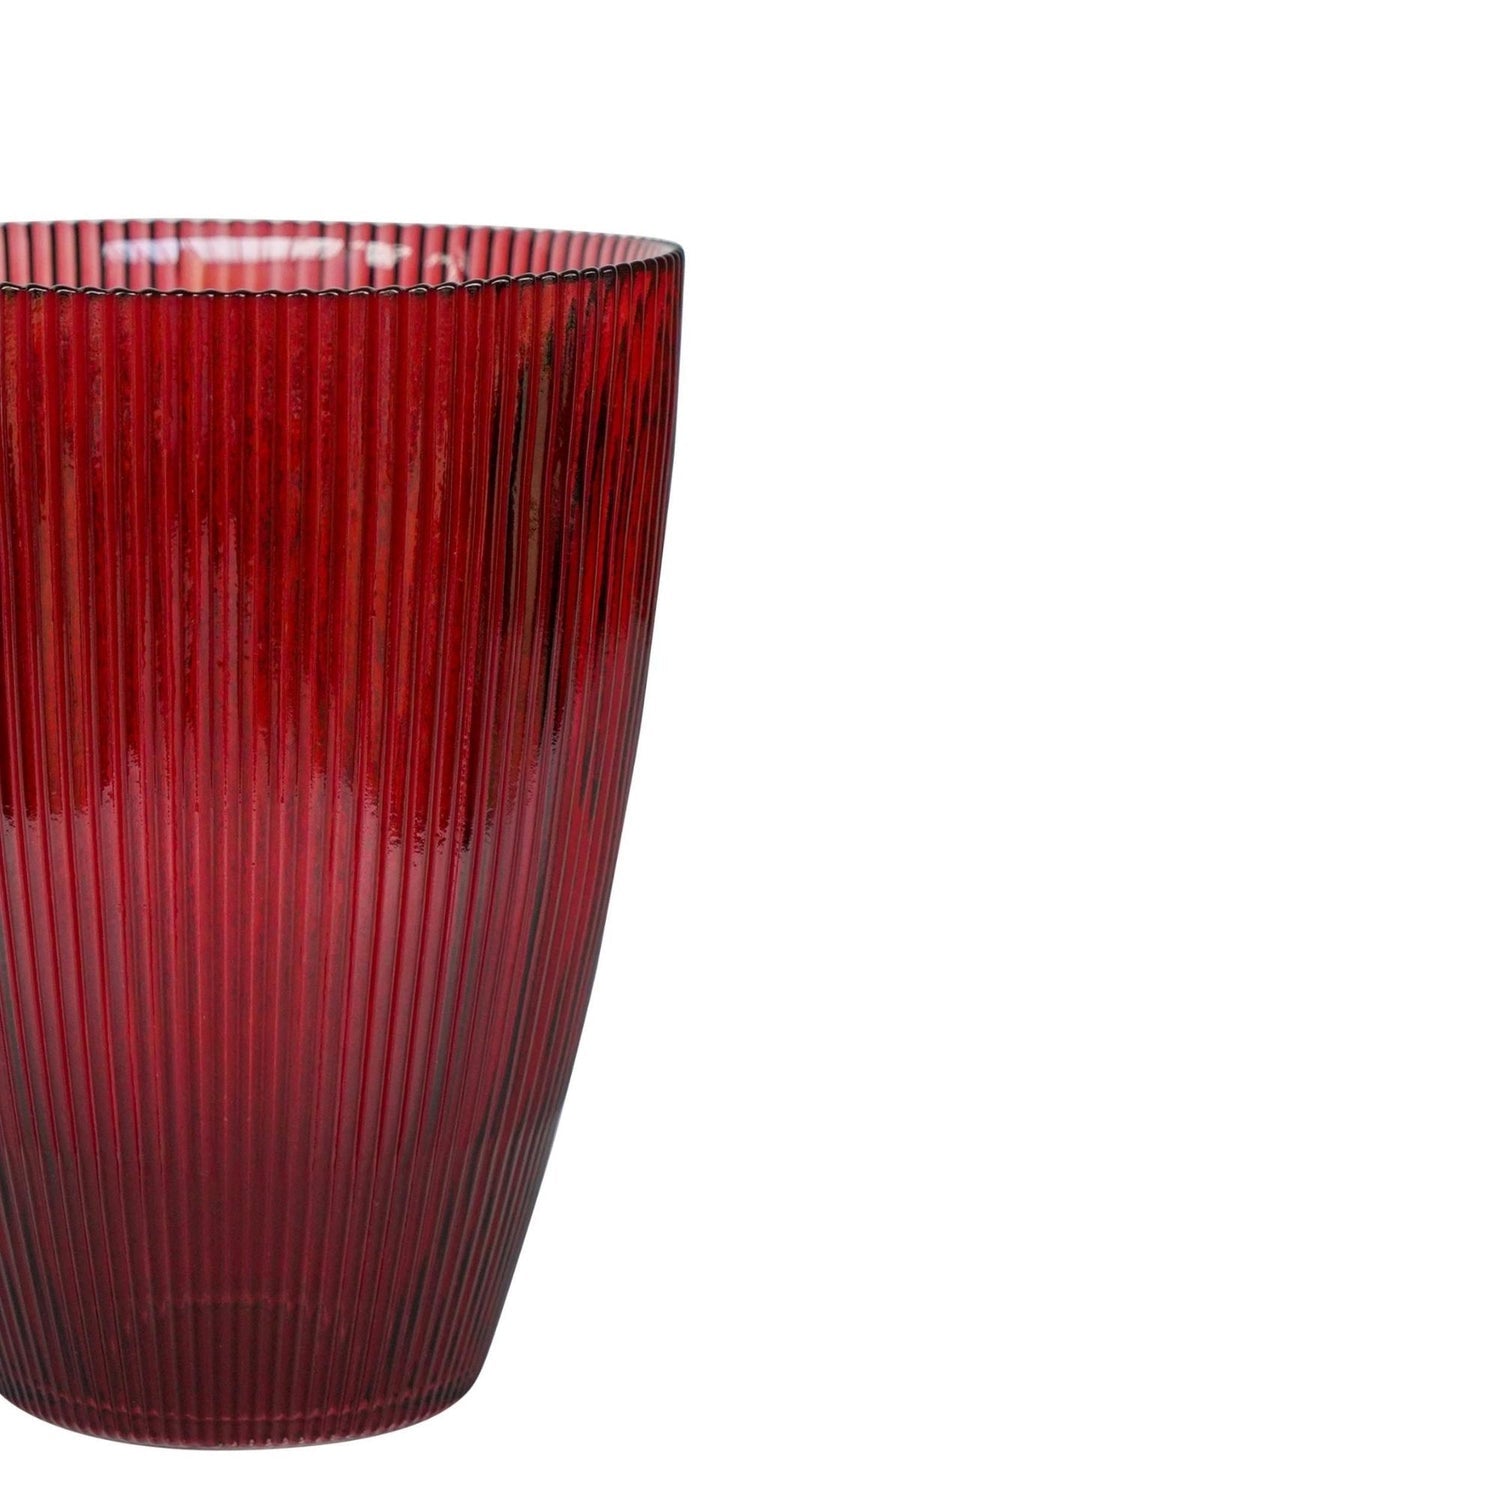 Tall Ribbed Decorative Glass Vase